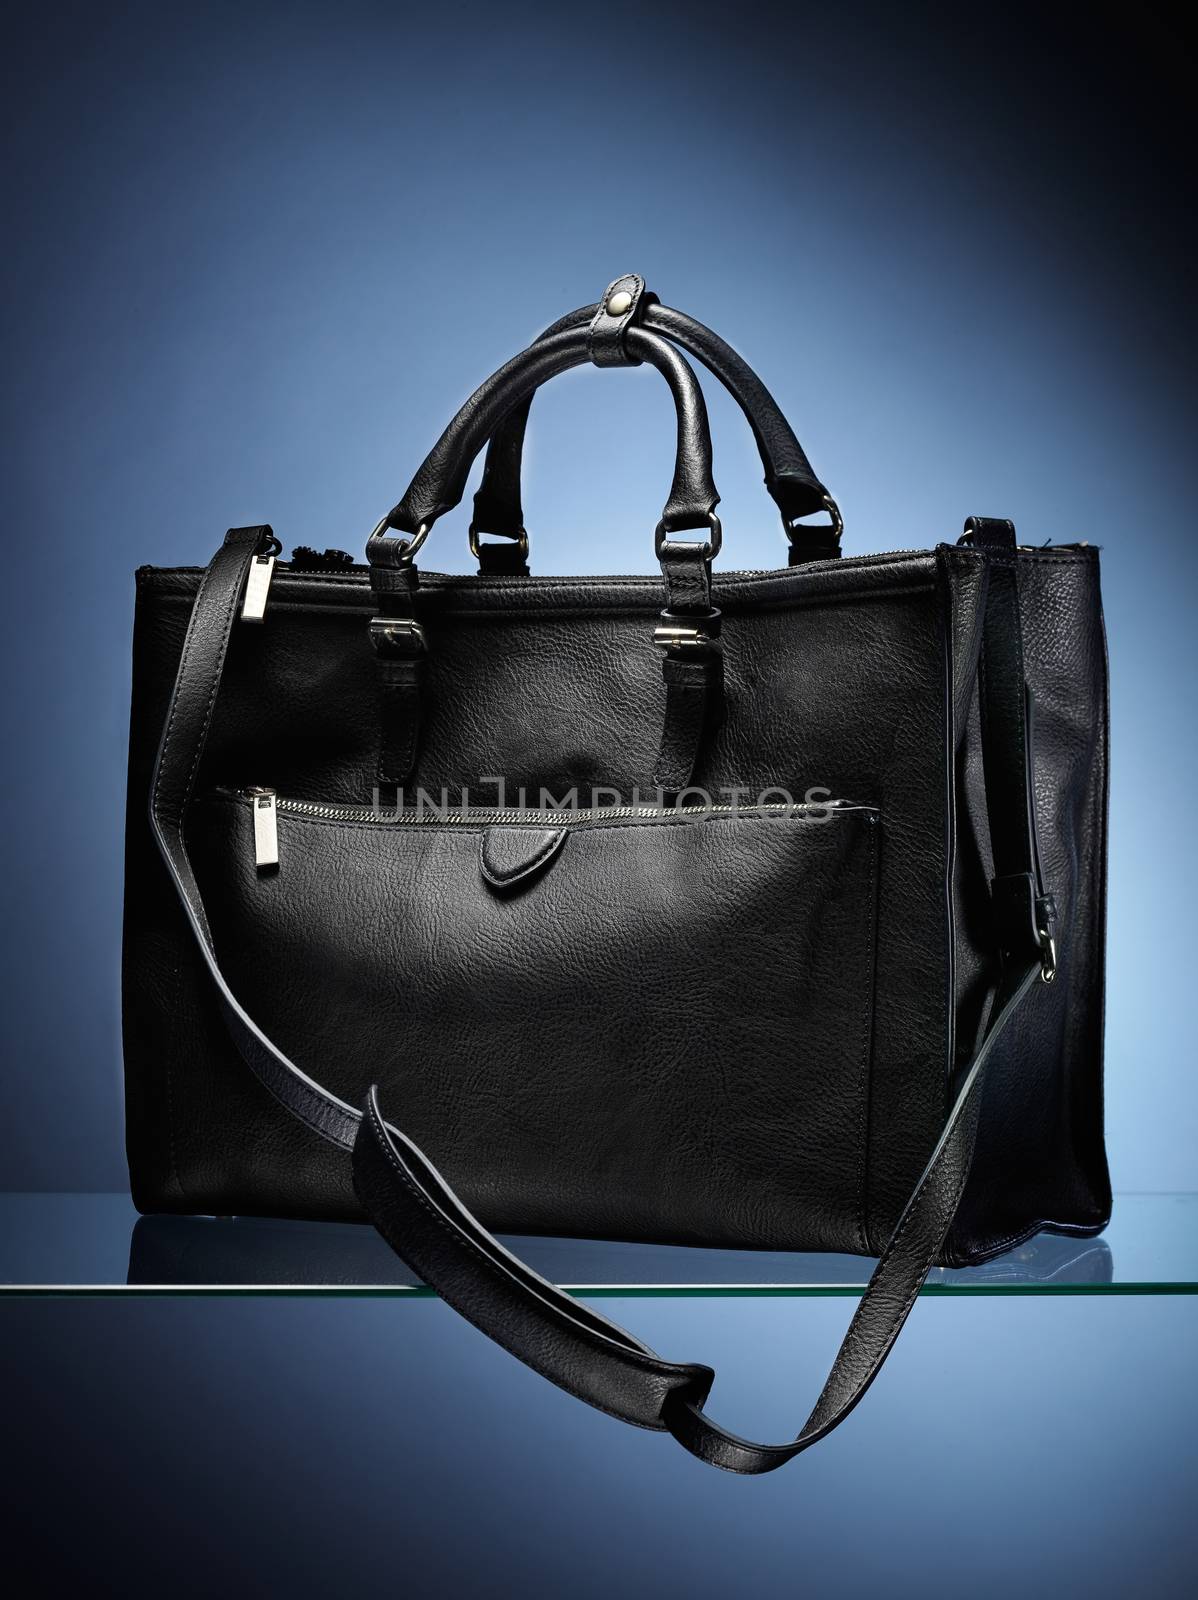 woman's handbag by agg